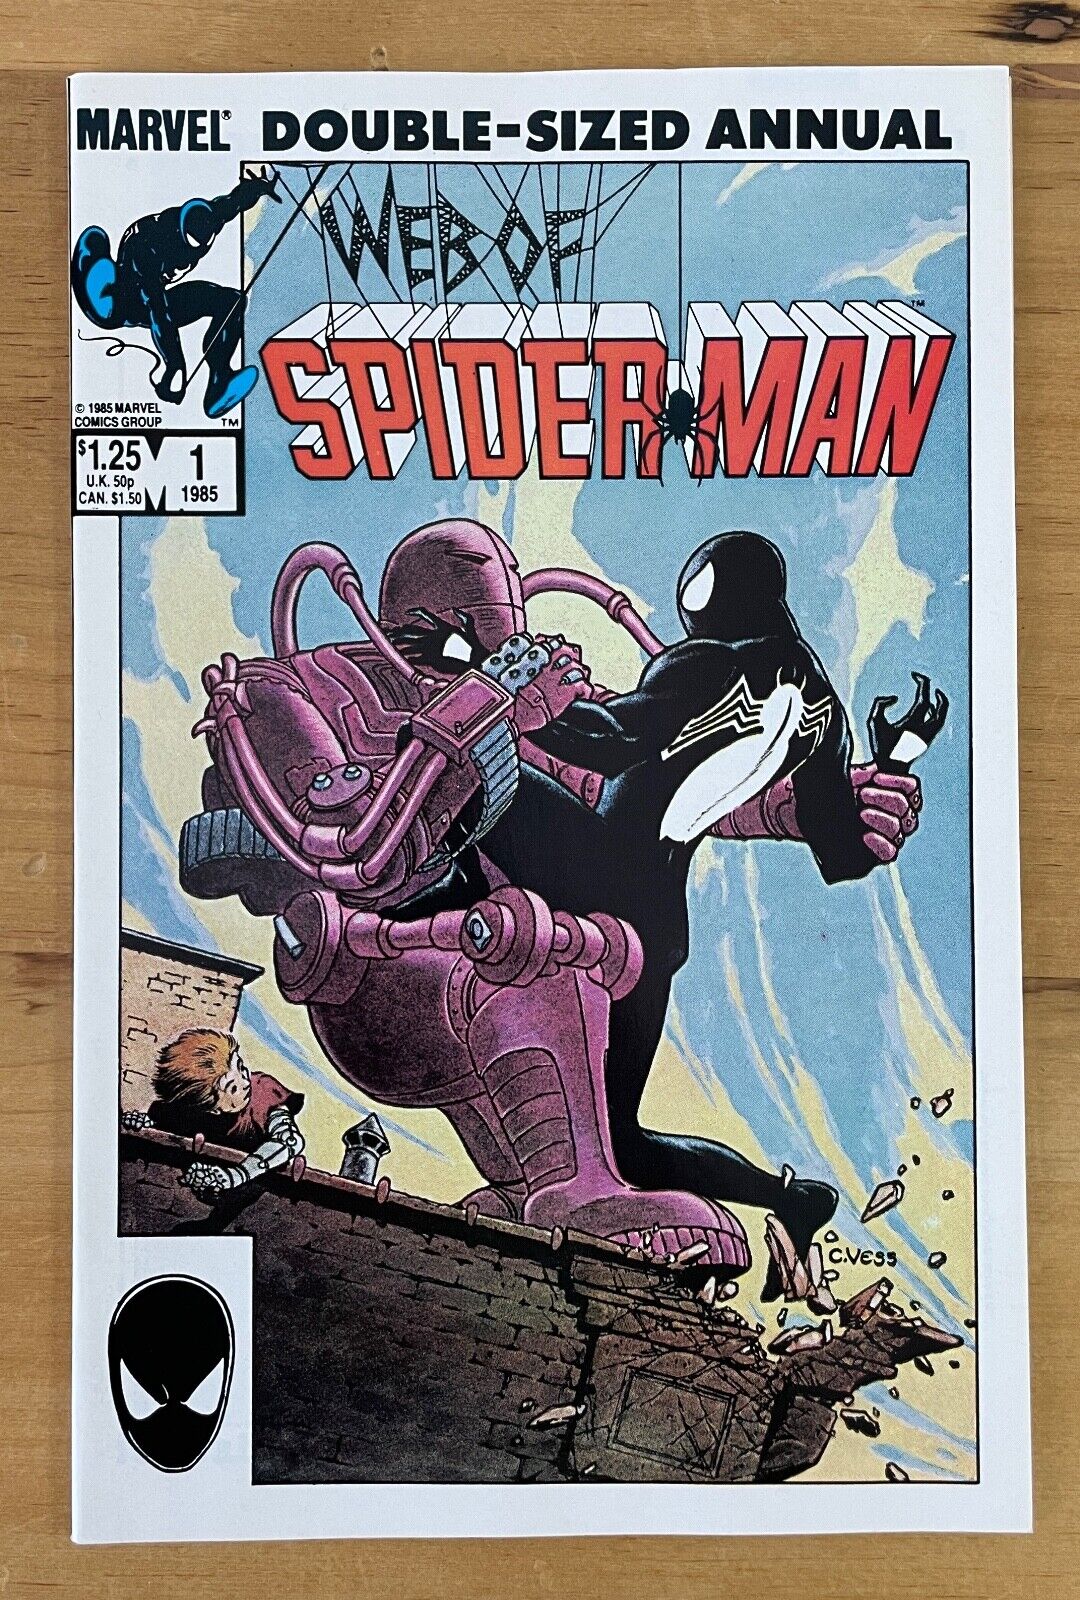 WEB OF SPIDER-MAN ANNUAL #1 ~ MARVEL COMICS 1985 ~ NM+